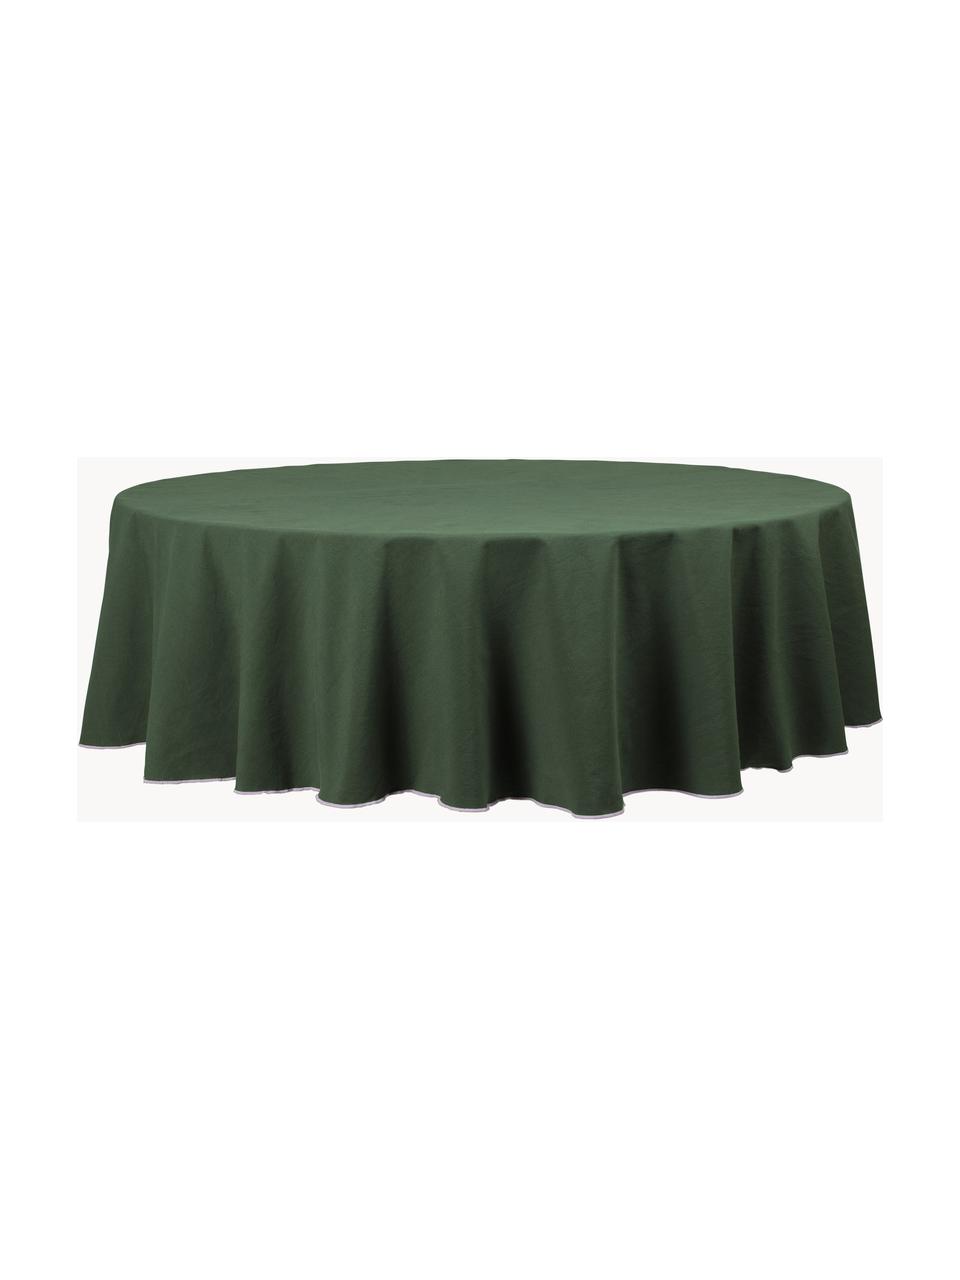 Mantel redondo Wilhelmina, 100% algodón, Verde oscuro, De 6 a 8 comensales (Ø 200 cm)